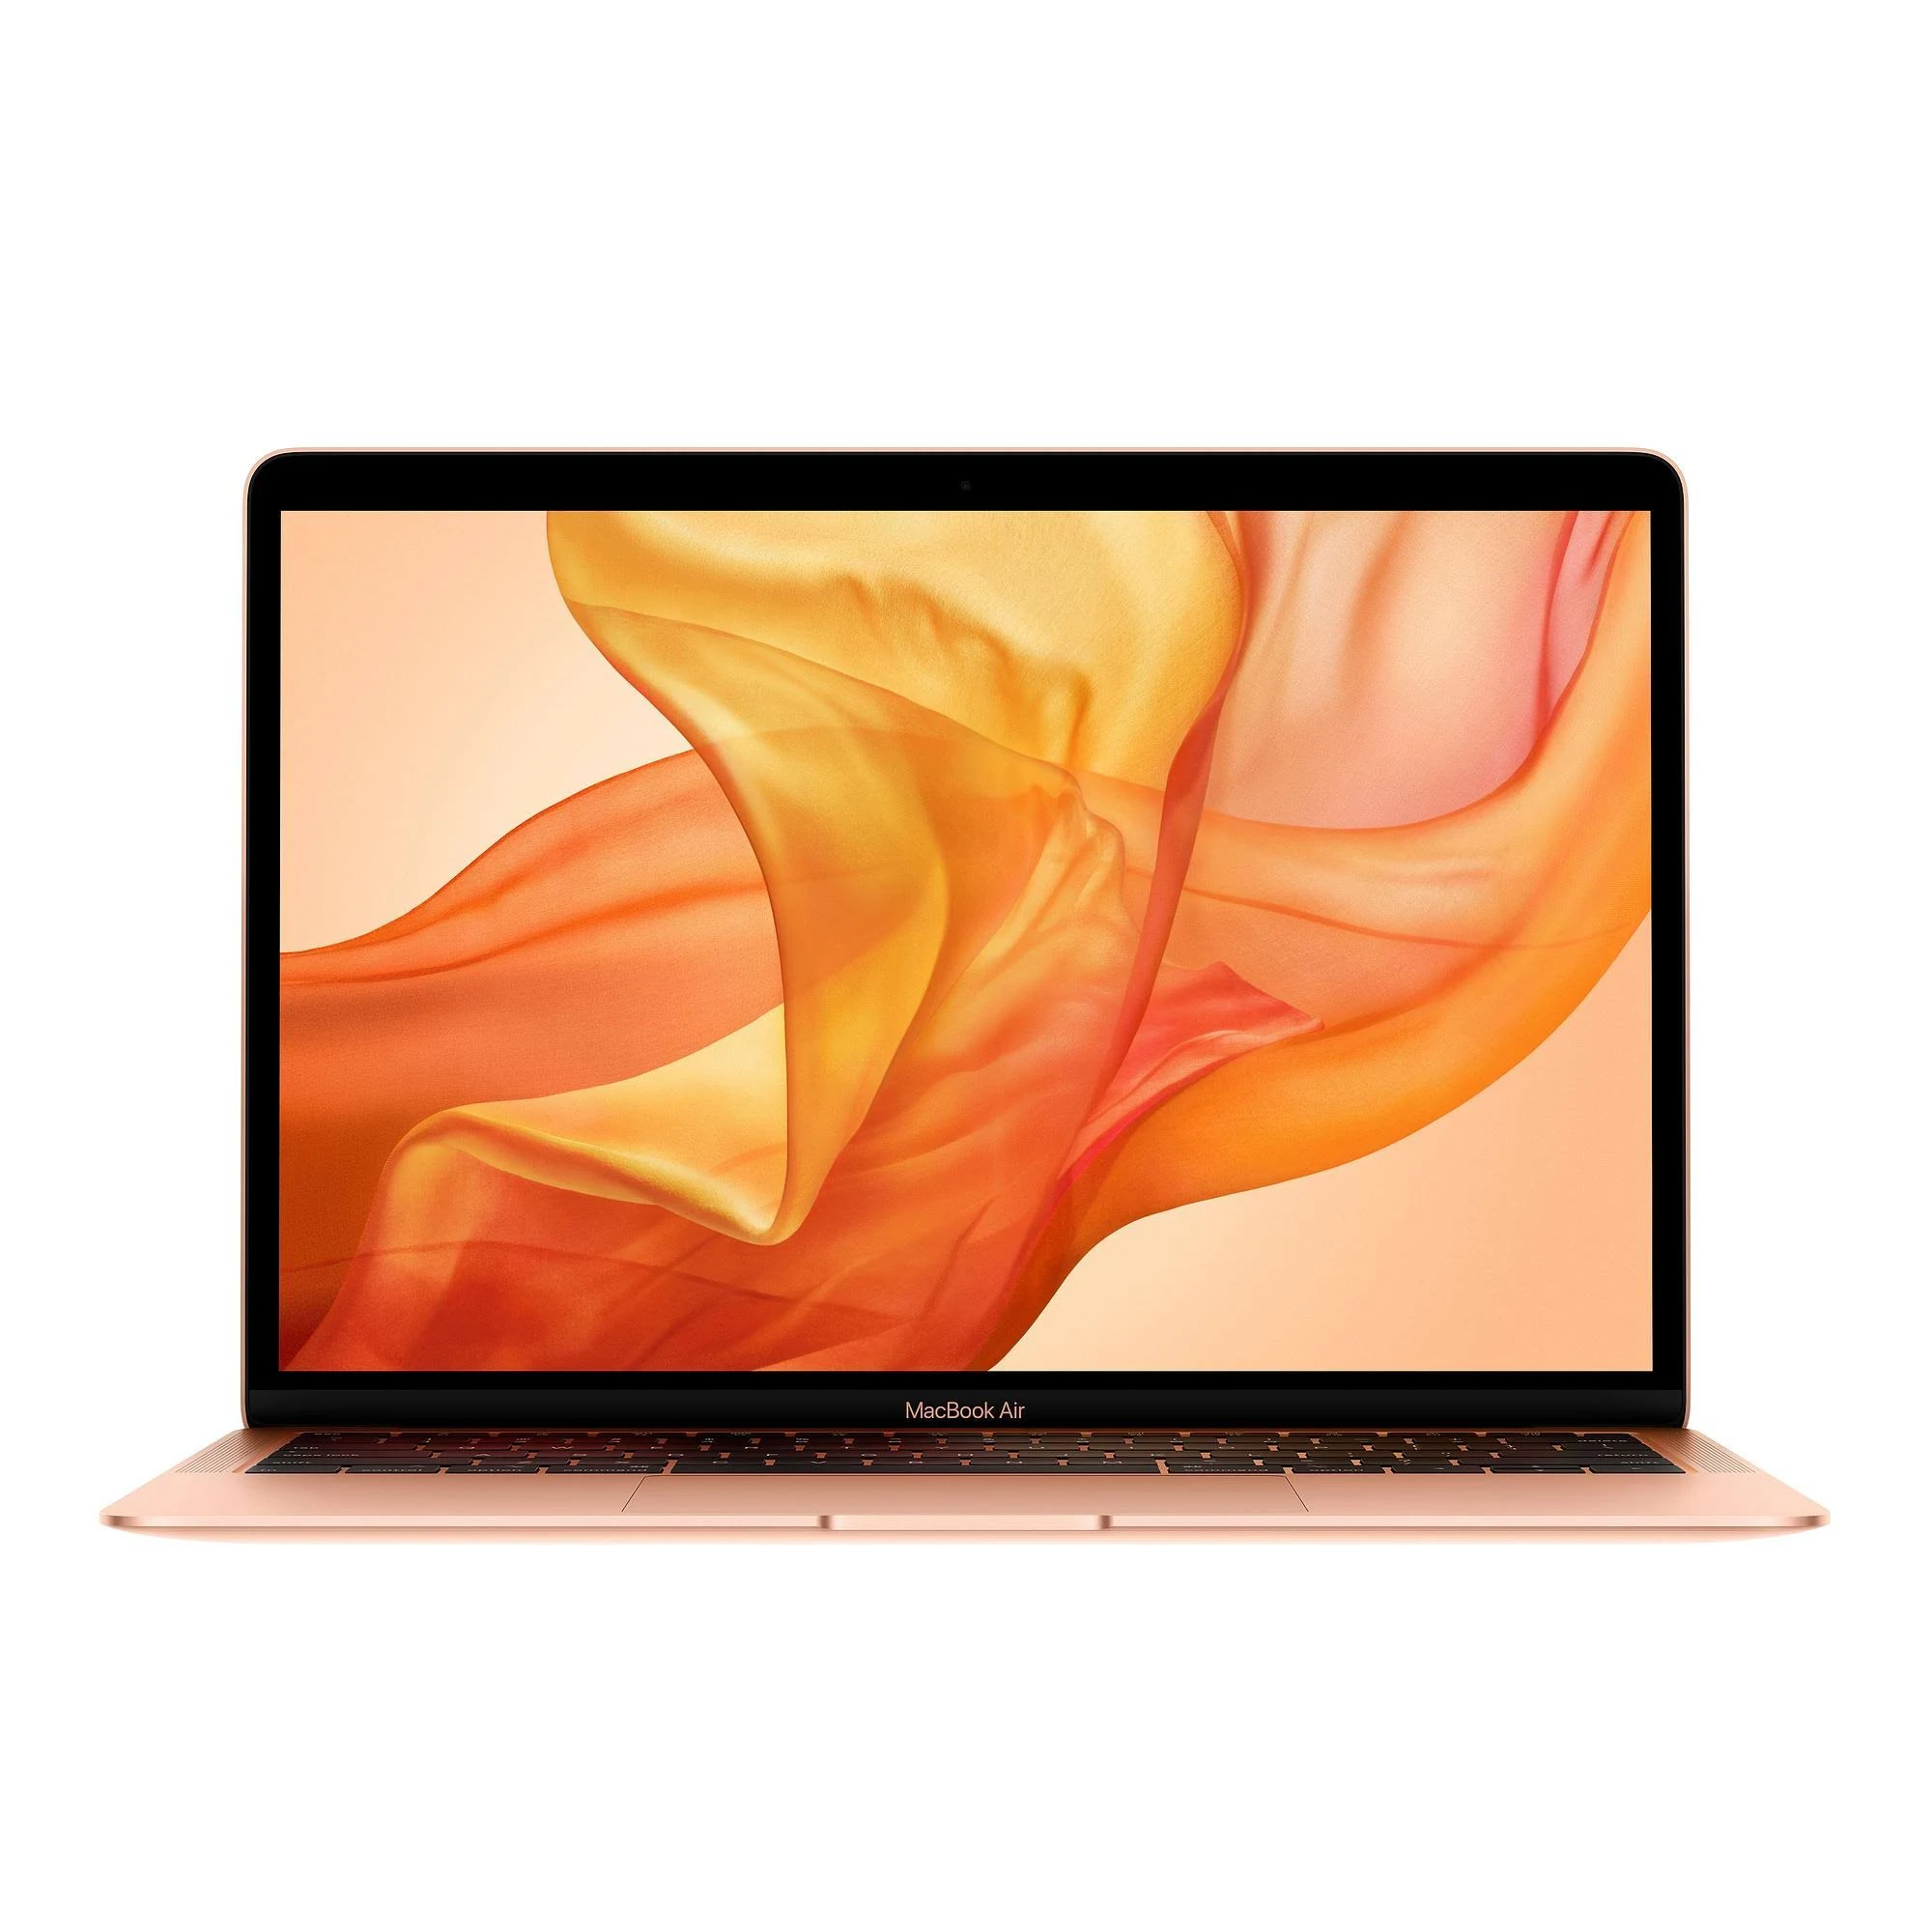 MacBook Air 13 inch True Tone 2019 i5 1.6GHz - 128GB SSD - 8GB Ram 128GB Gold Fair